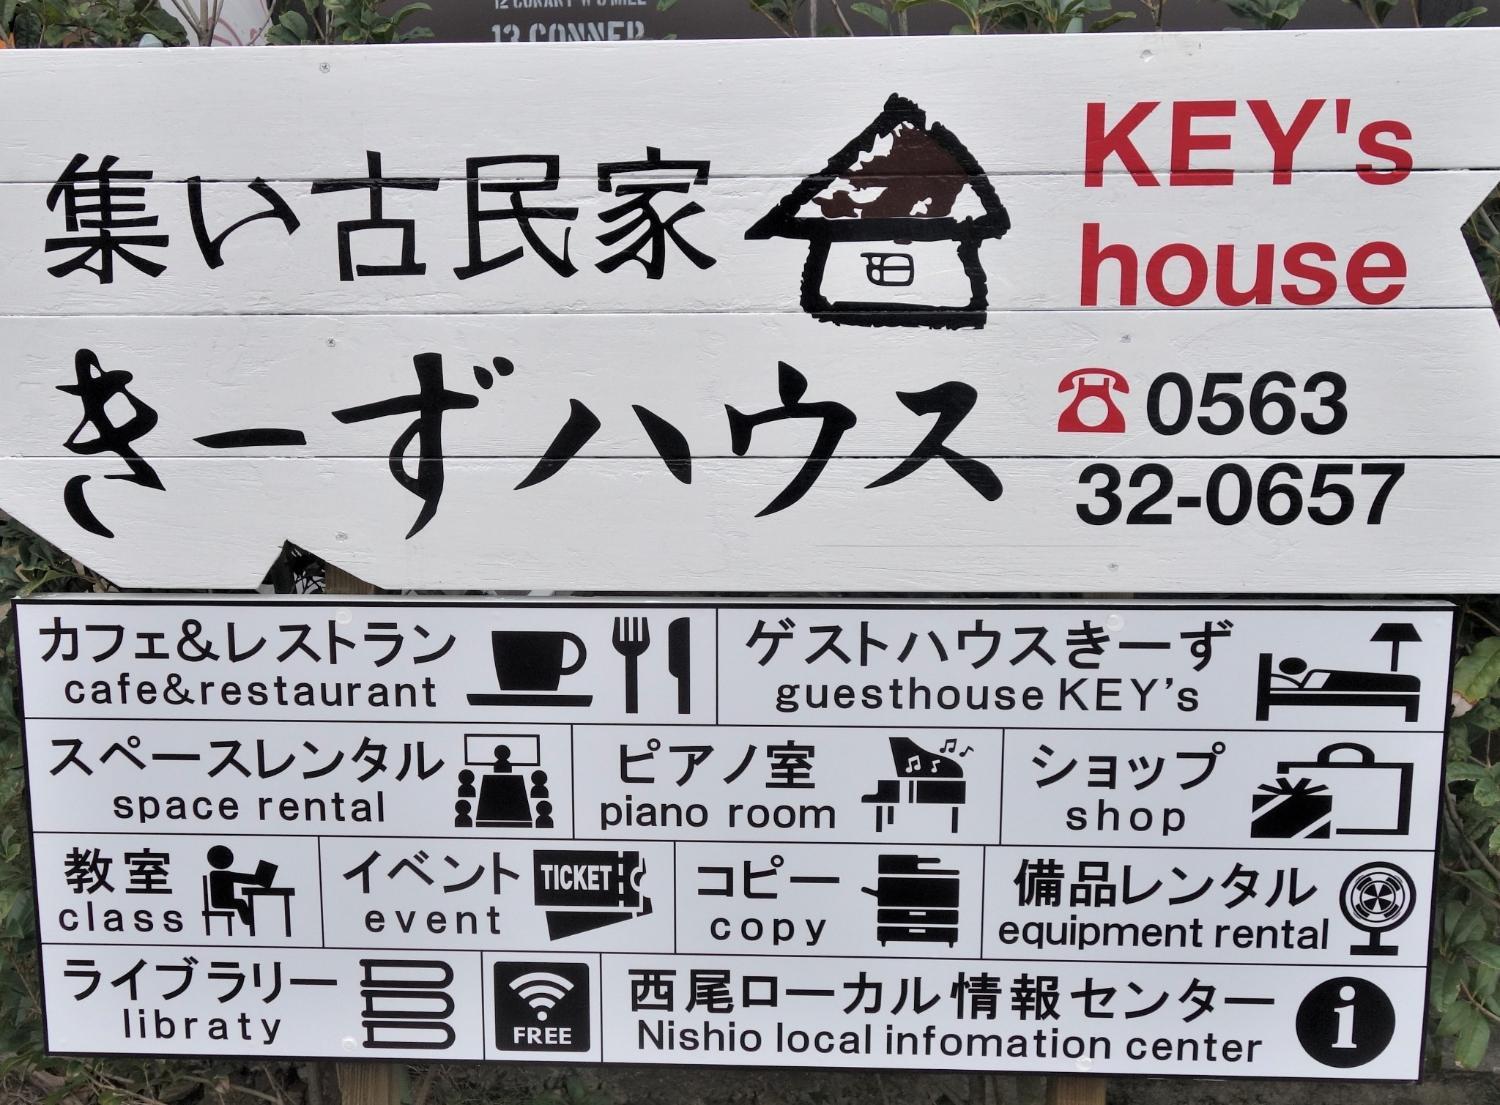 guest house Ki-zu - Vacation STAY 92940, Kira